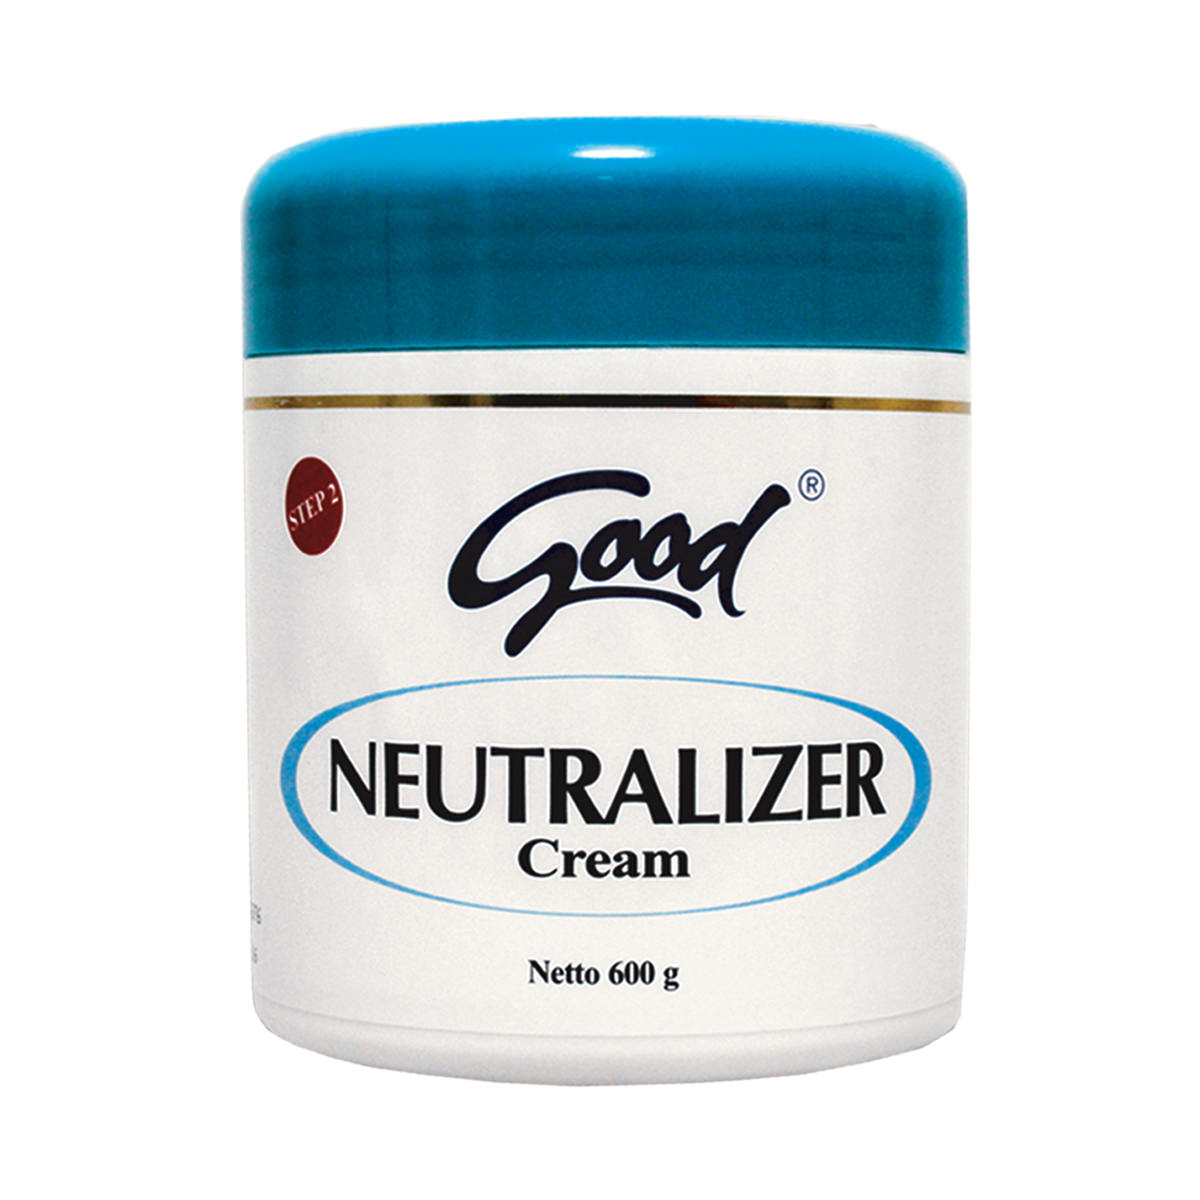 Good-Neutralizer-Cream-Step-2-sfw(1)